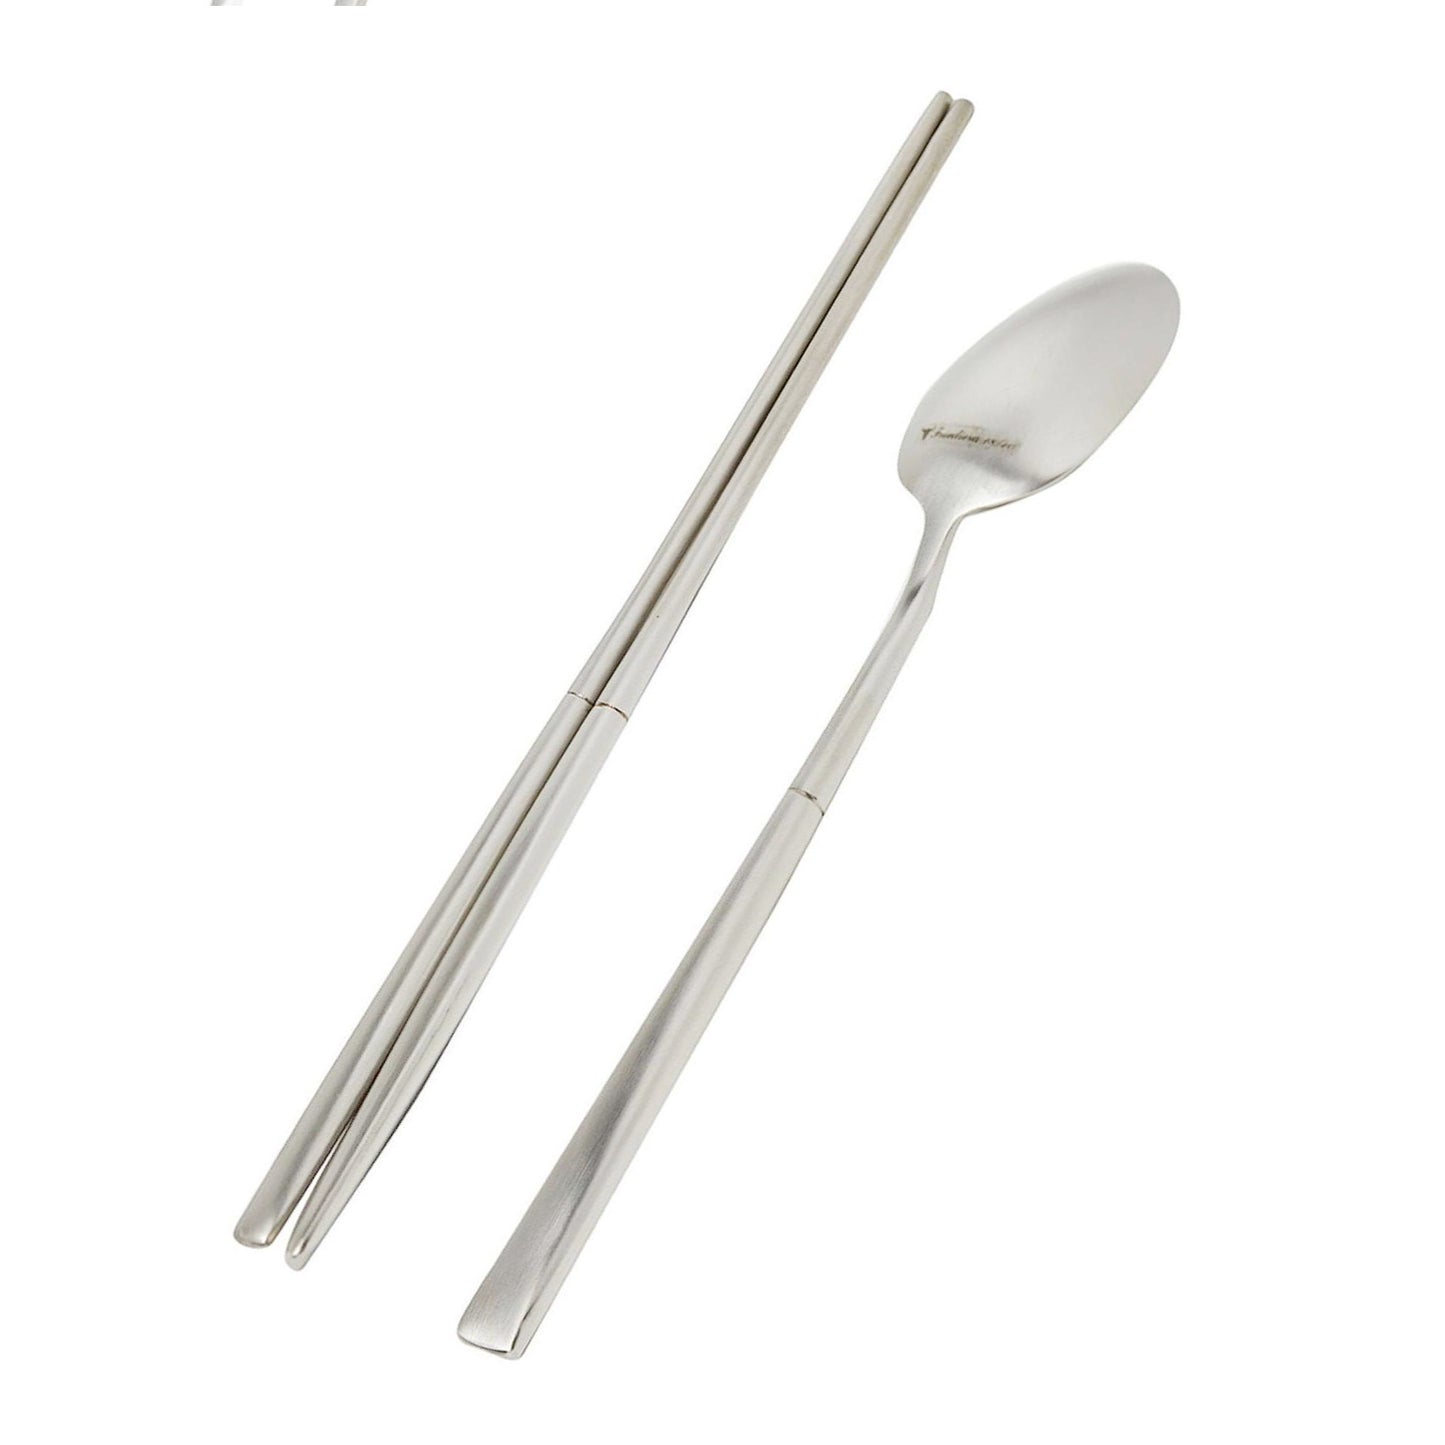 Luxus (Satin) Spoon & Chopsticks 8pc, Set of 4